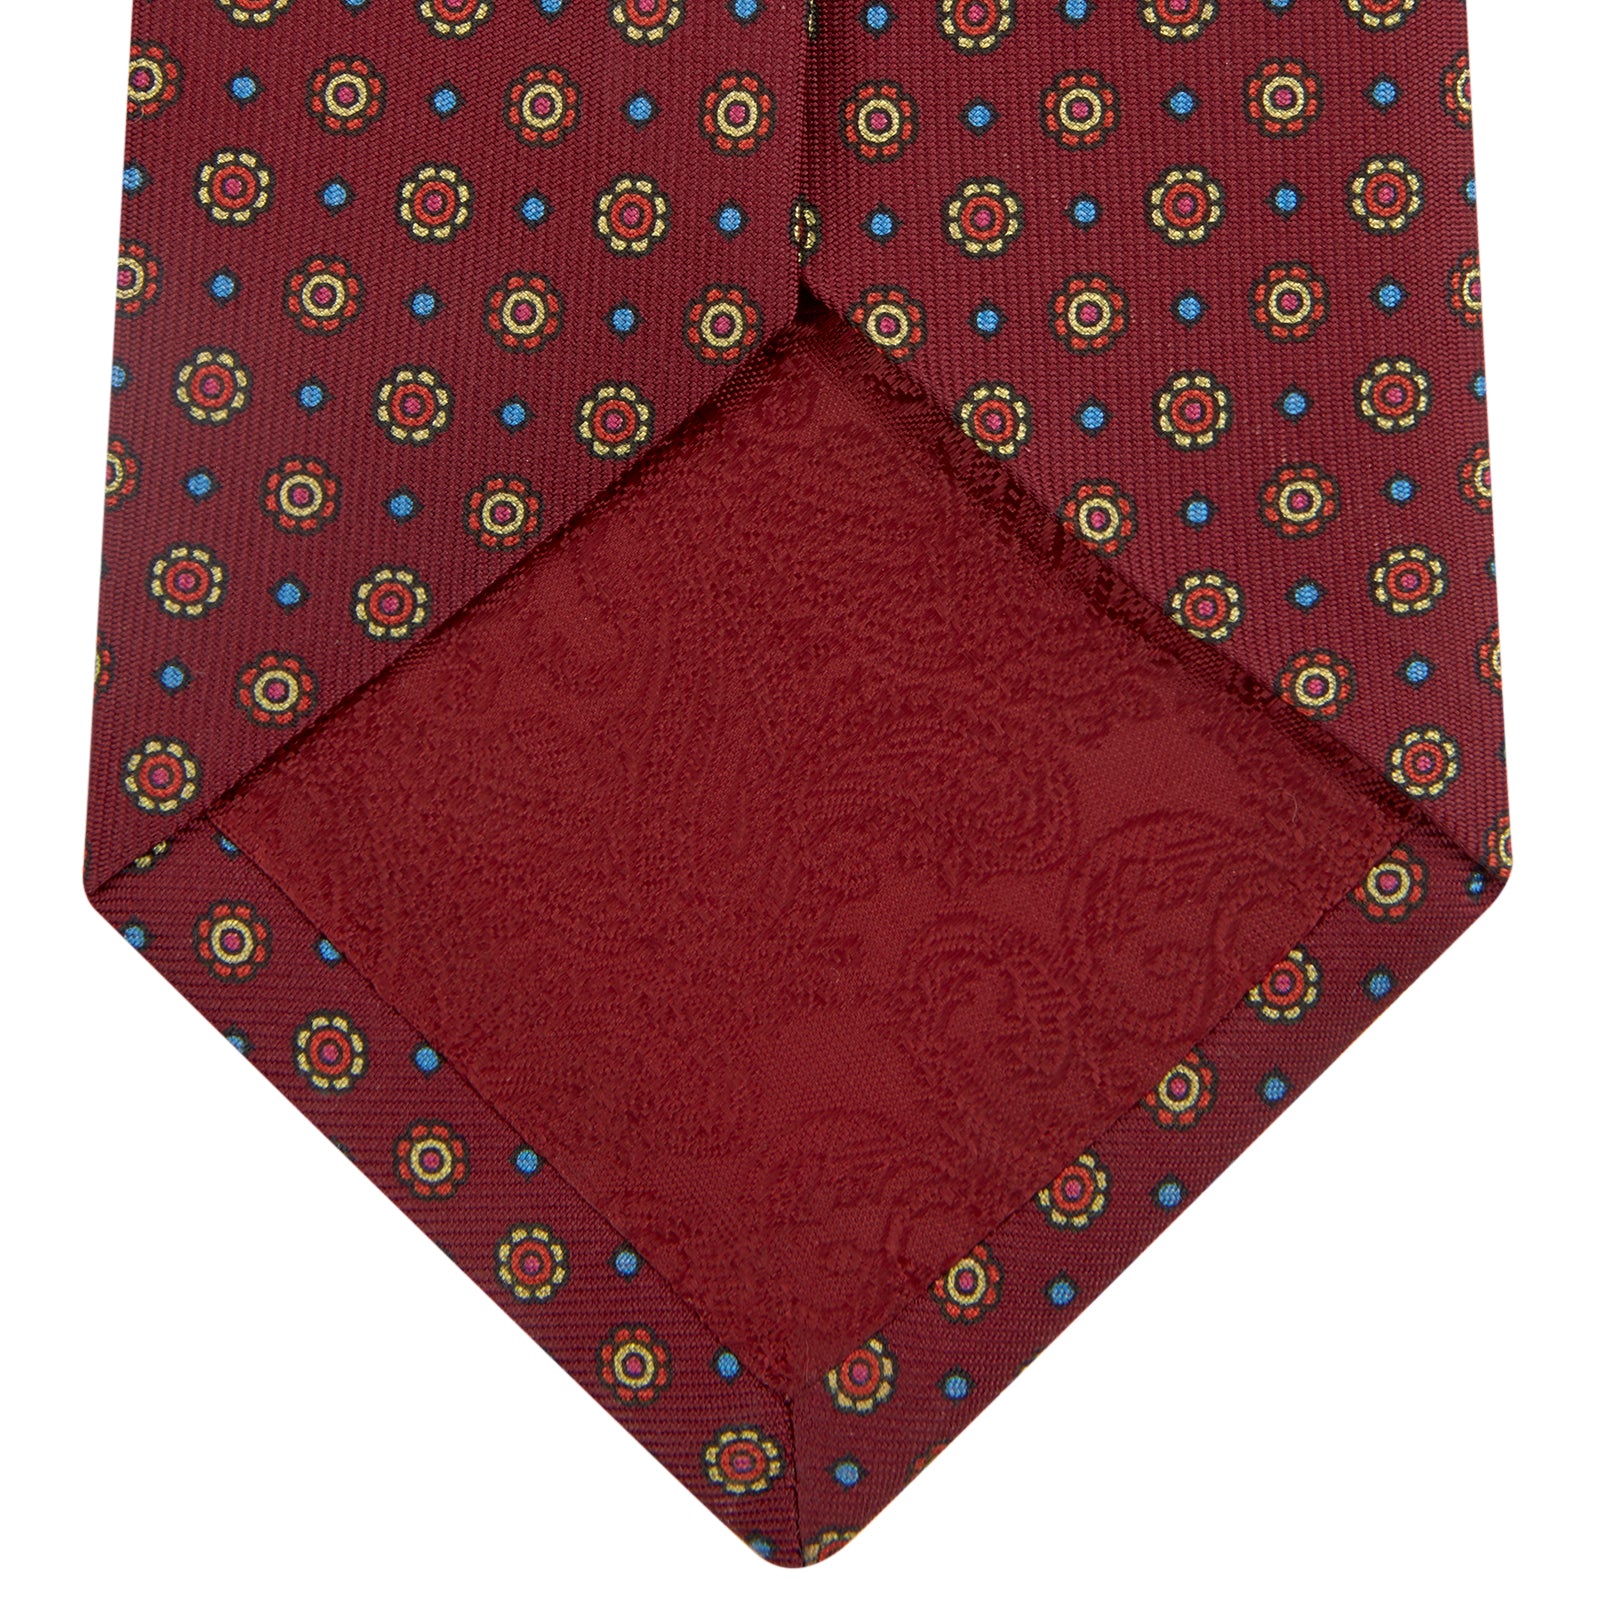 The Great Gatsby Burgundy Printed Silk Tie